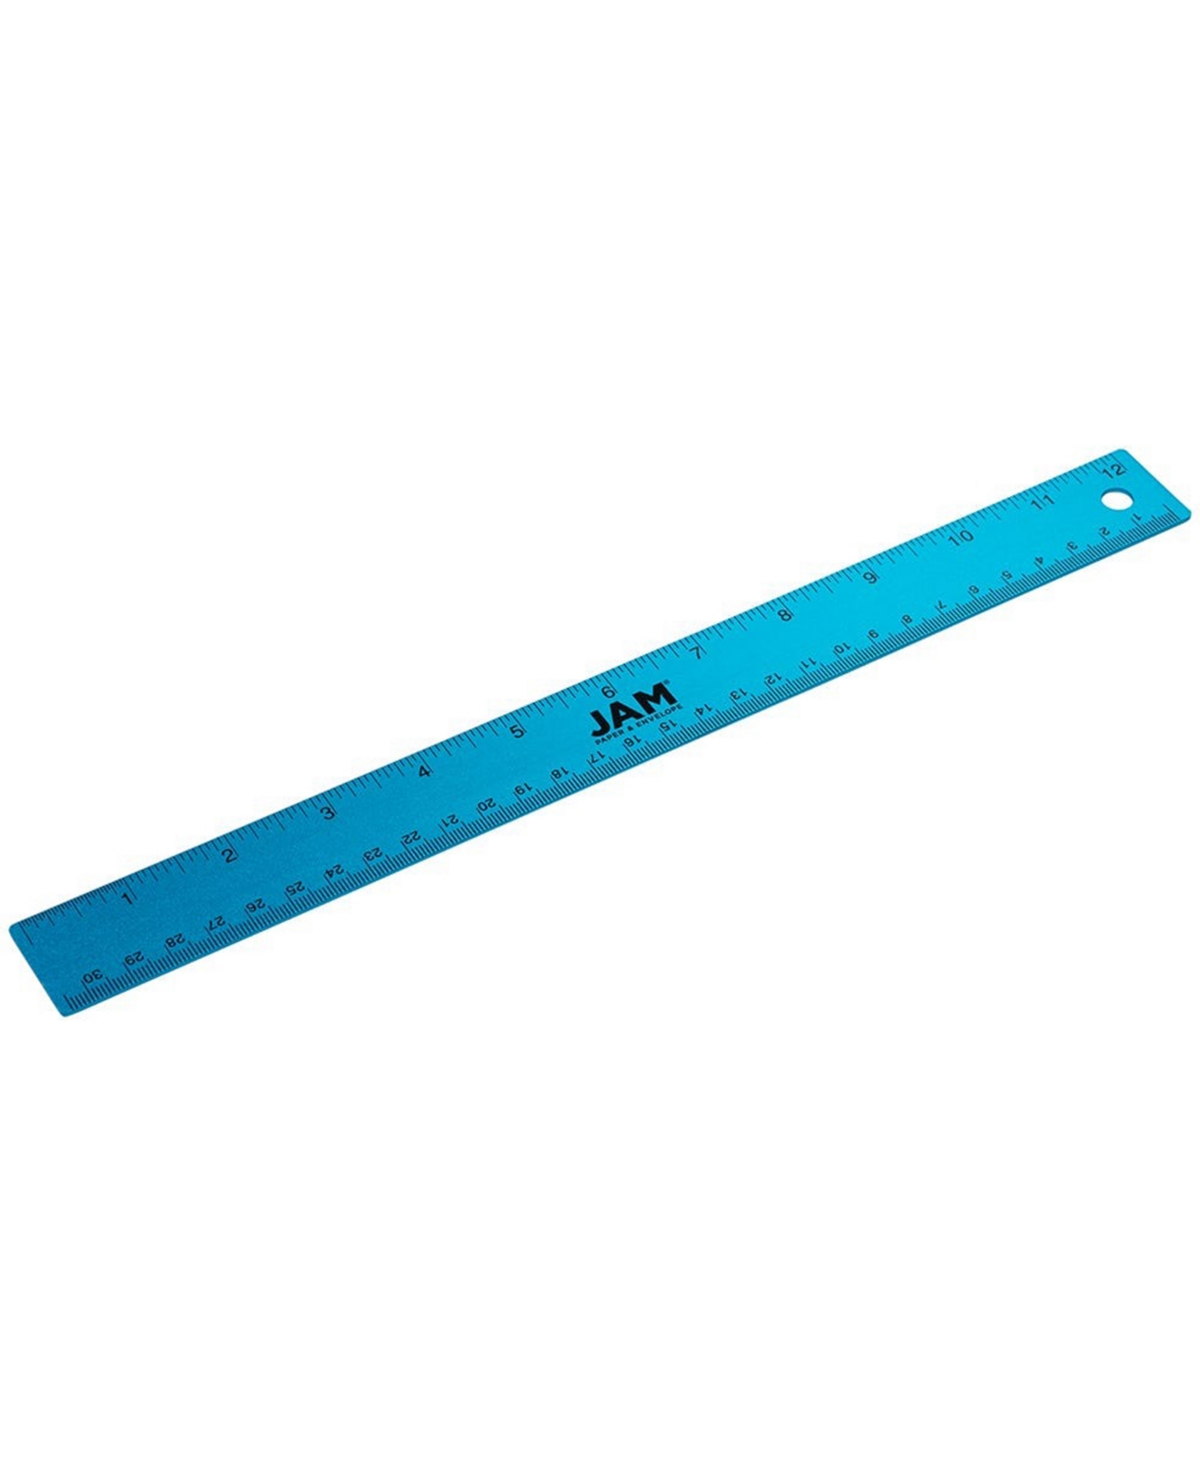 Strong Aluminum Ruler - 12" - Metal Ruler with Non-Skid Cork Backing - Blue Metallic